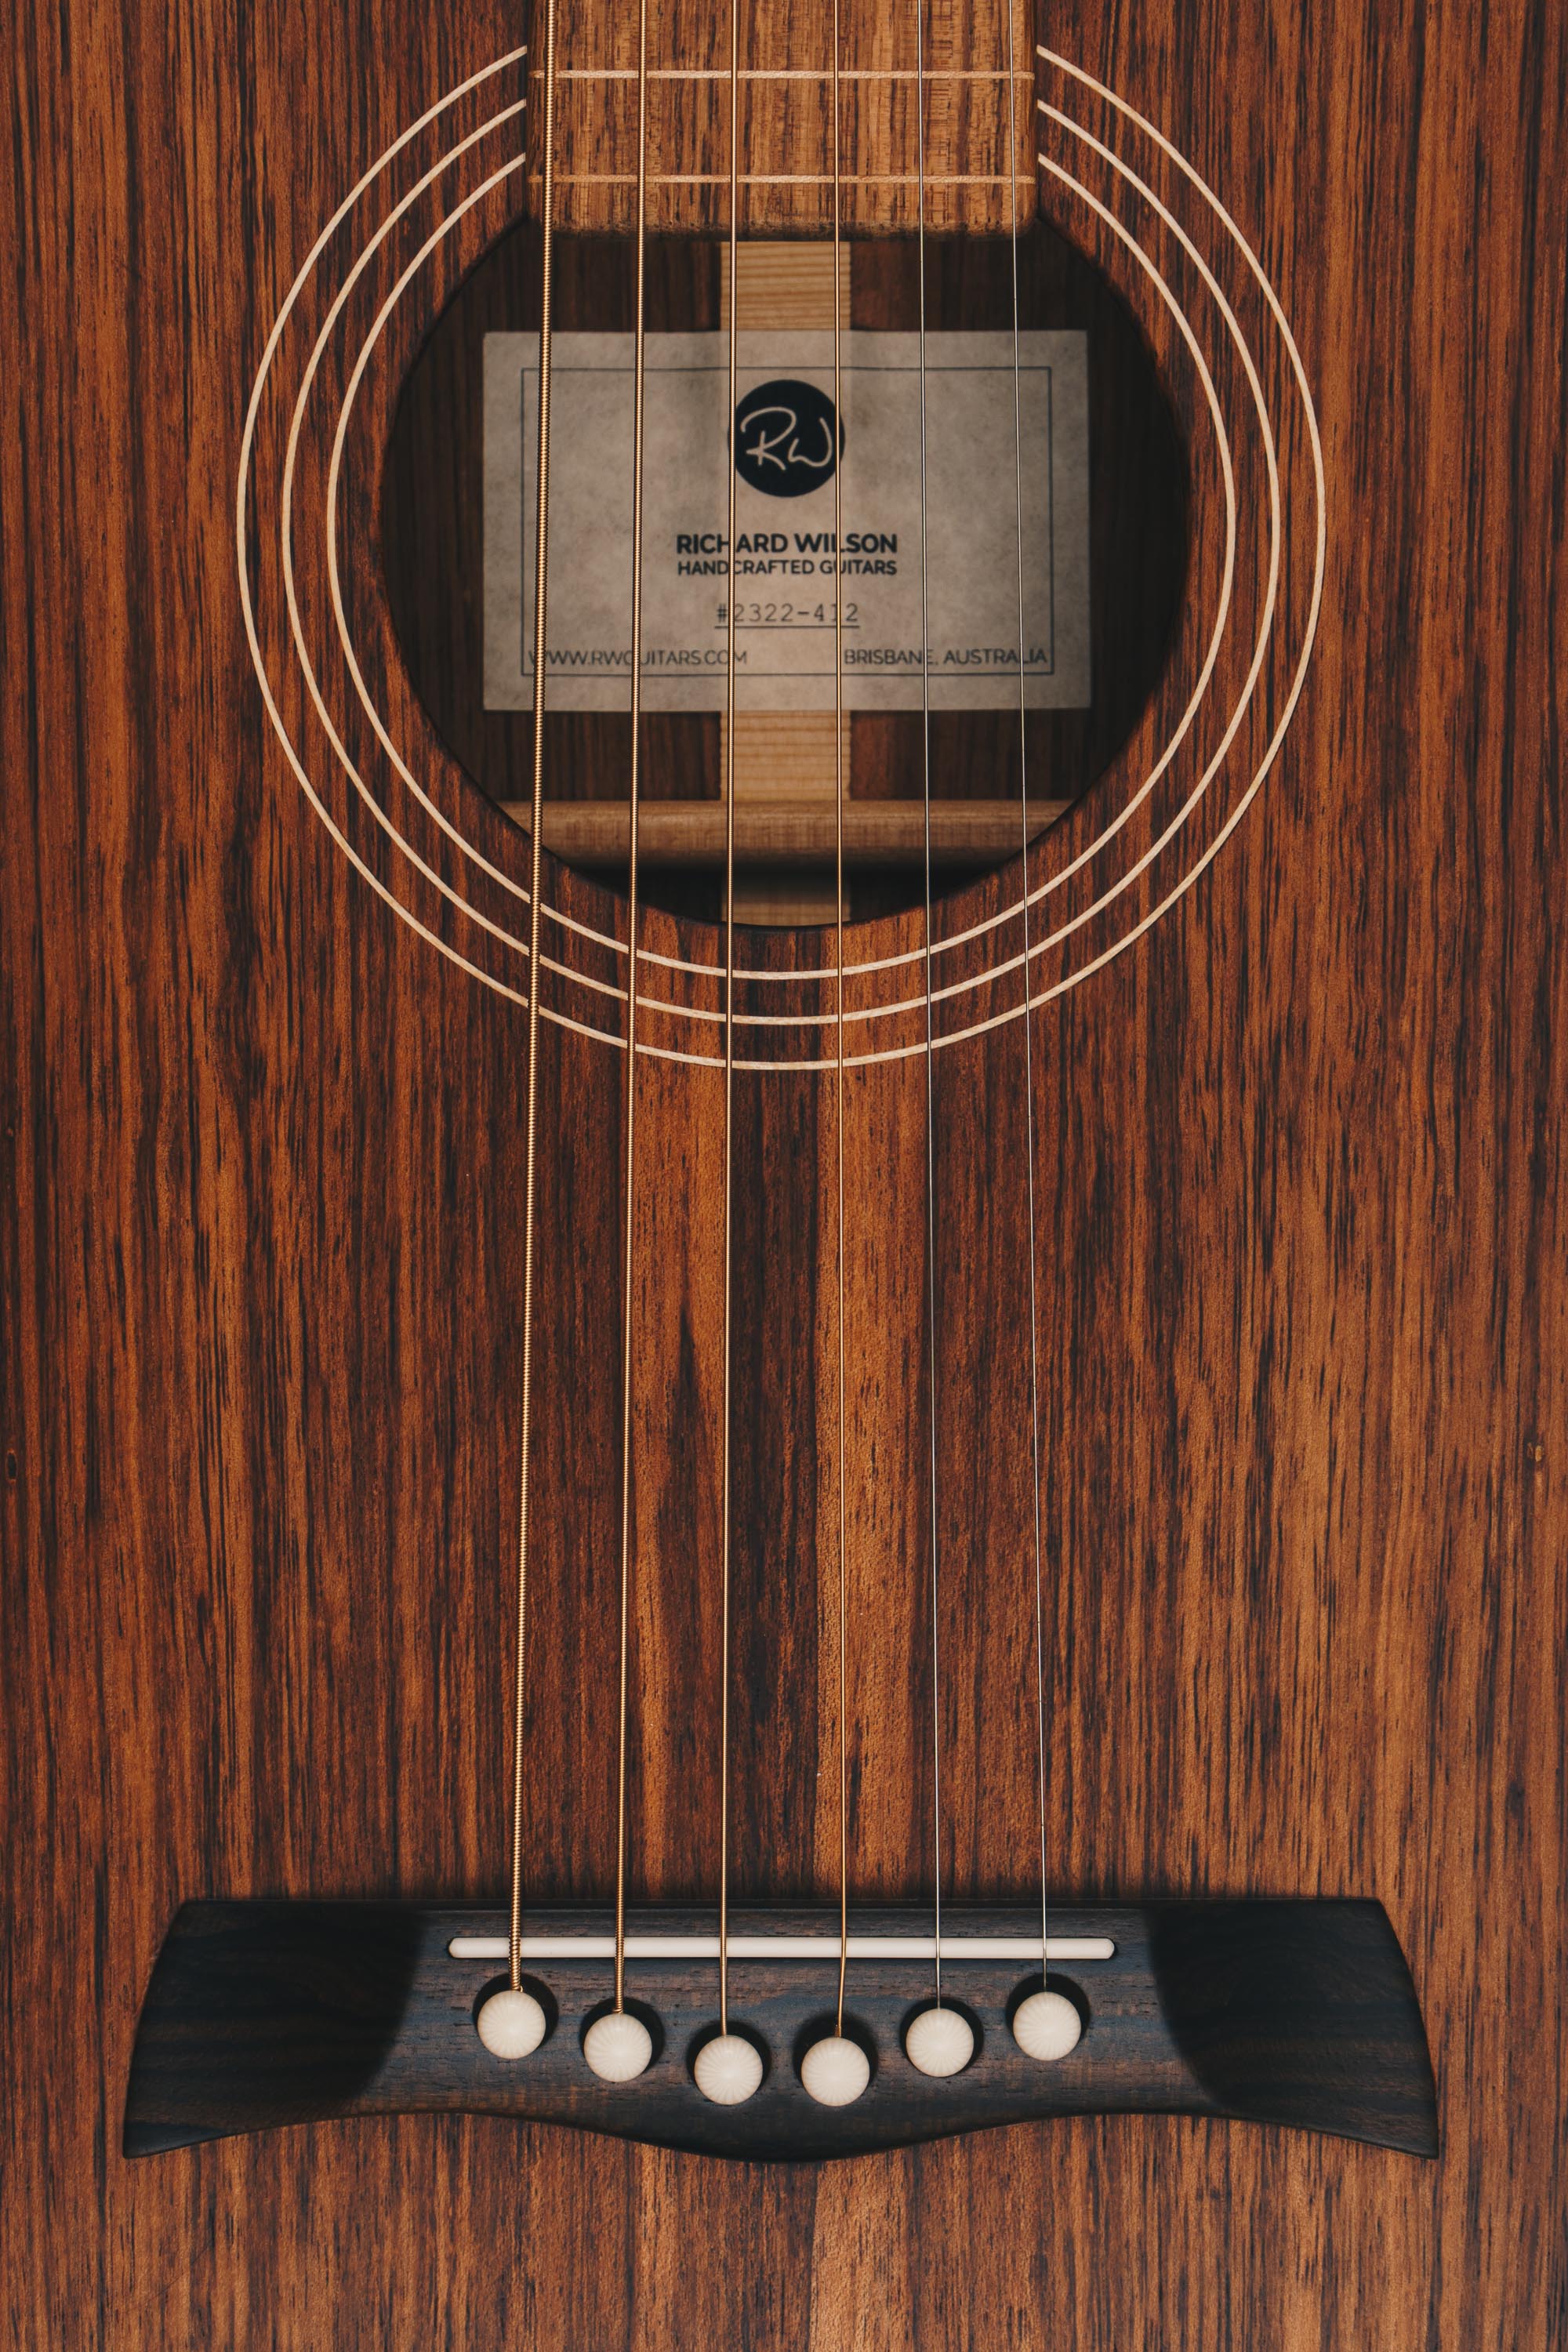 Style 1 Weissenborn Guitar Weissenborn Acoustic Lap Steel Slide Guitar by master luthier Richard Wilson. Handcrafted in Australia. Serial no. RW2322-412.